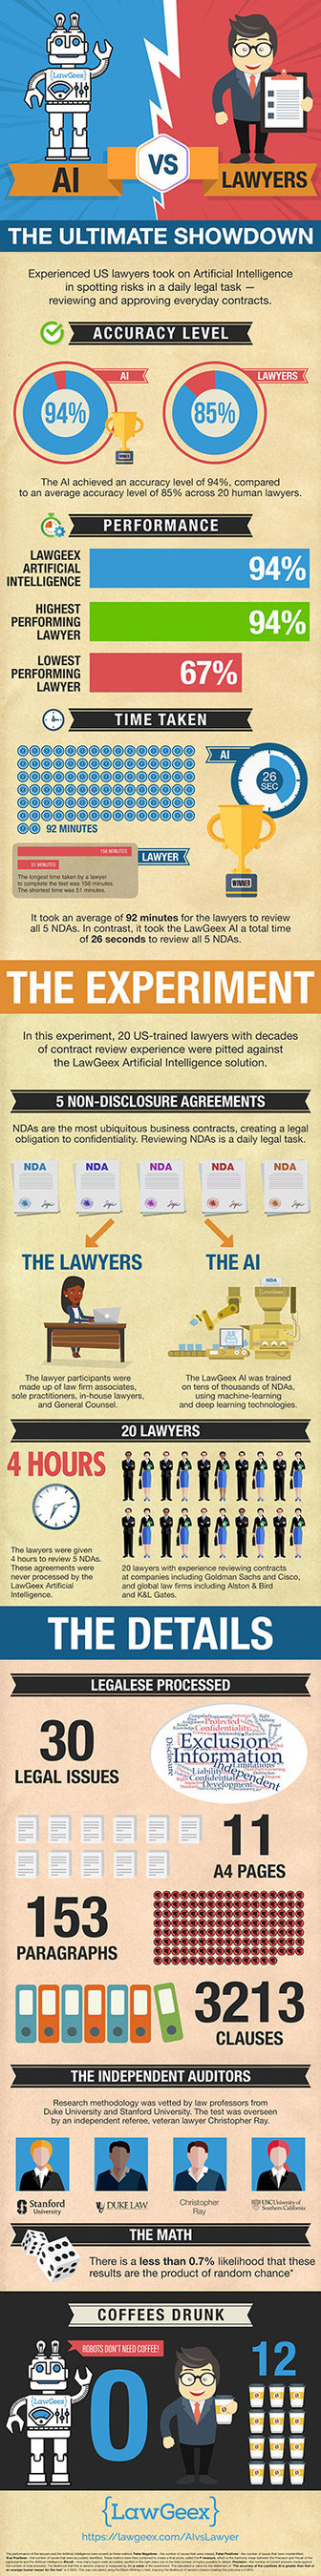 AI Vs. Lawyers: The Ultimate Showdown